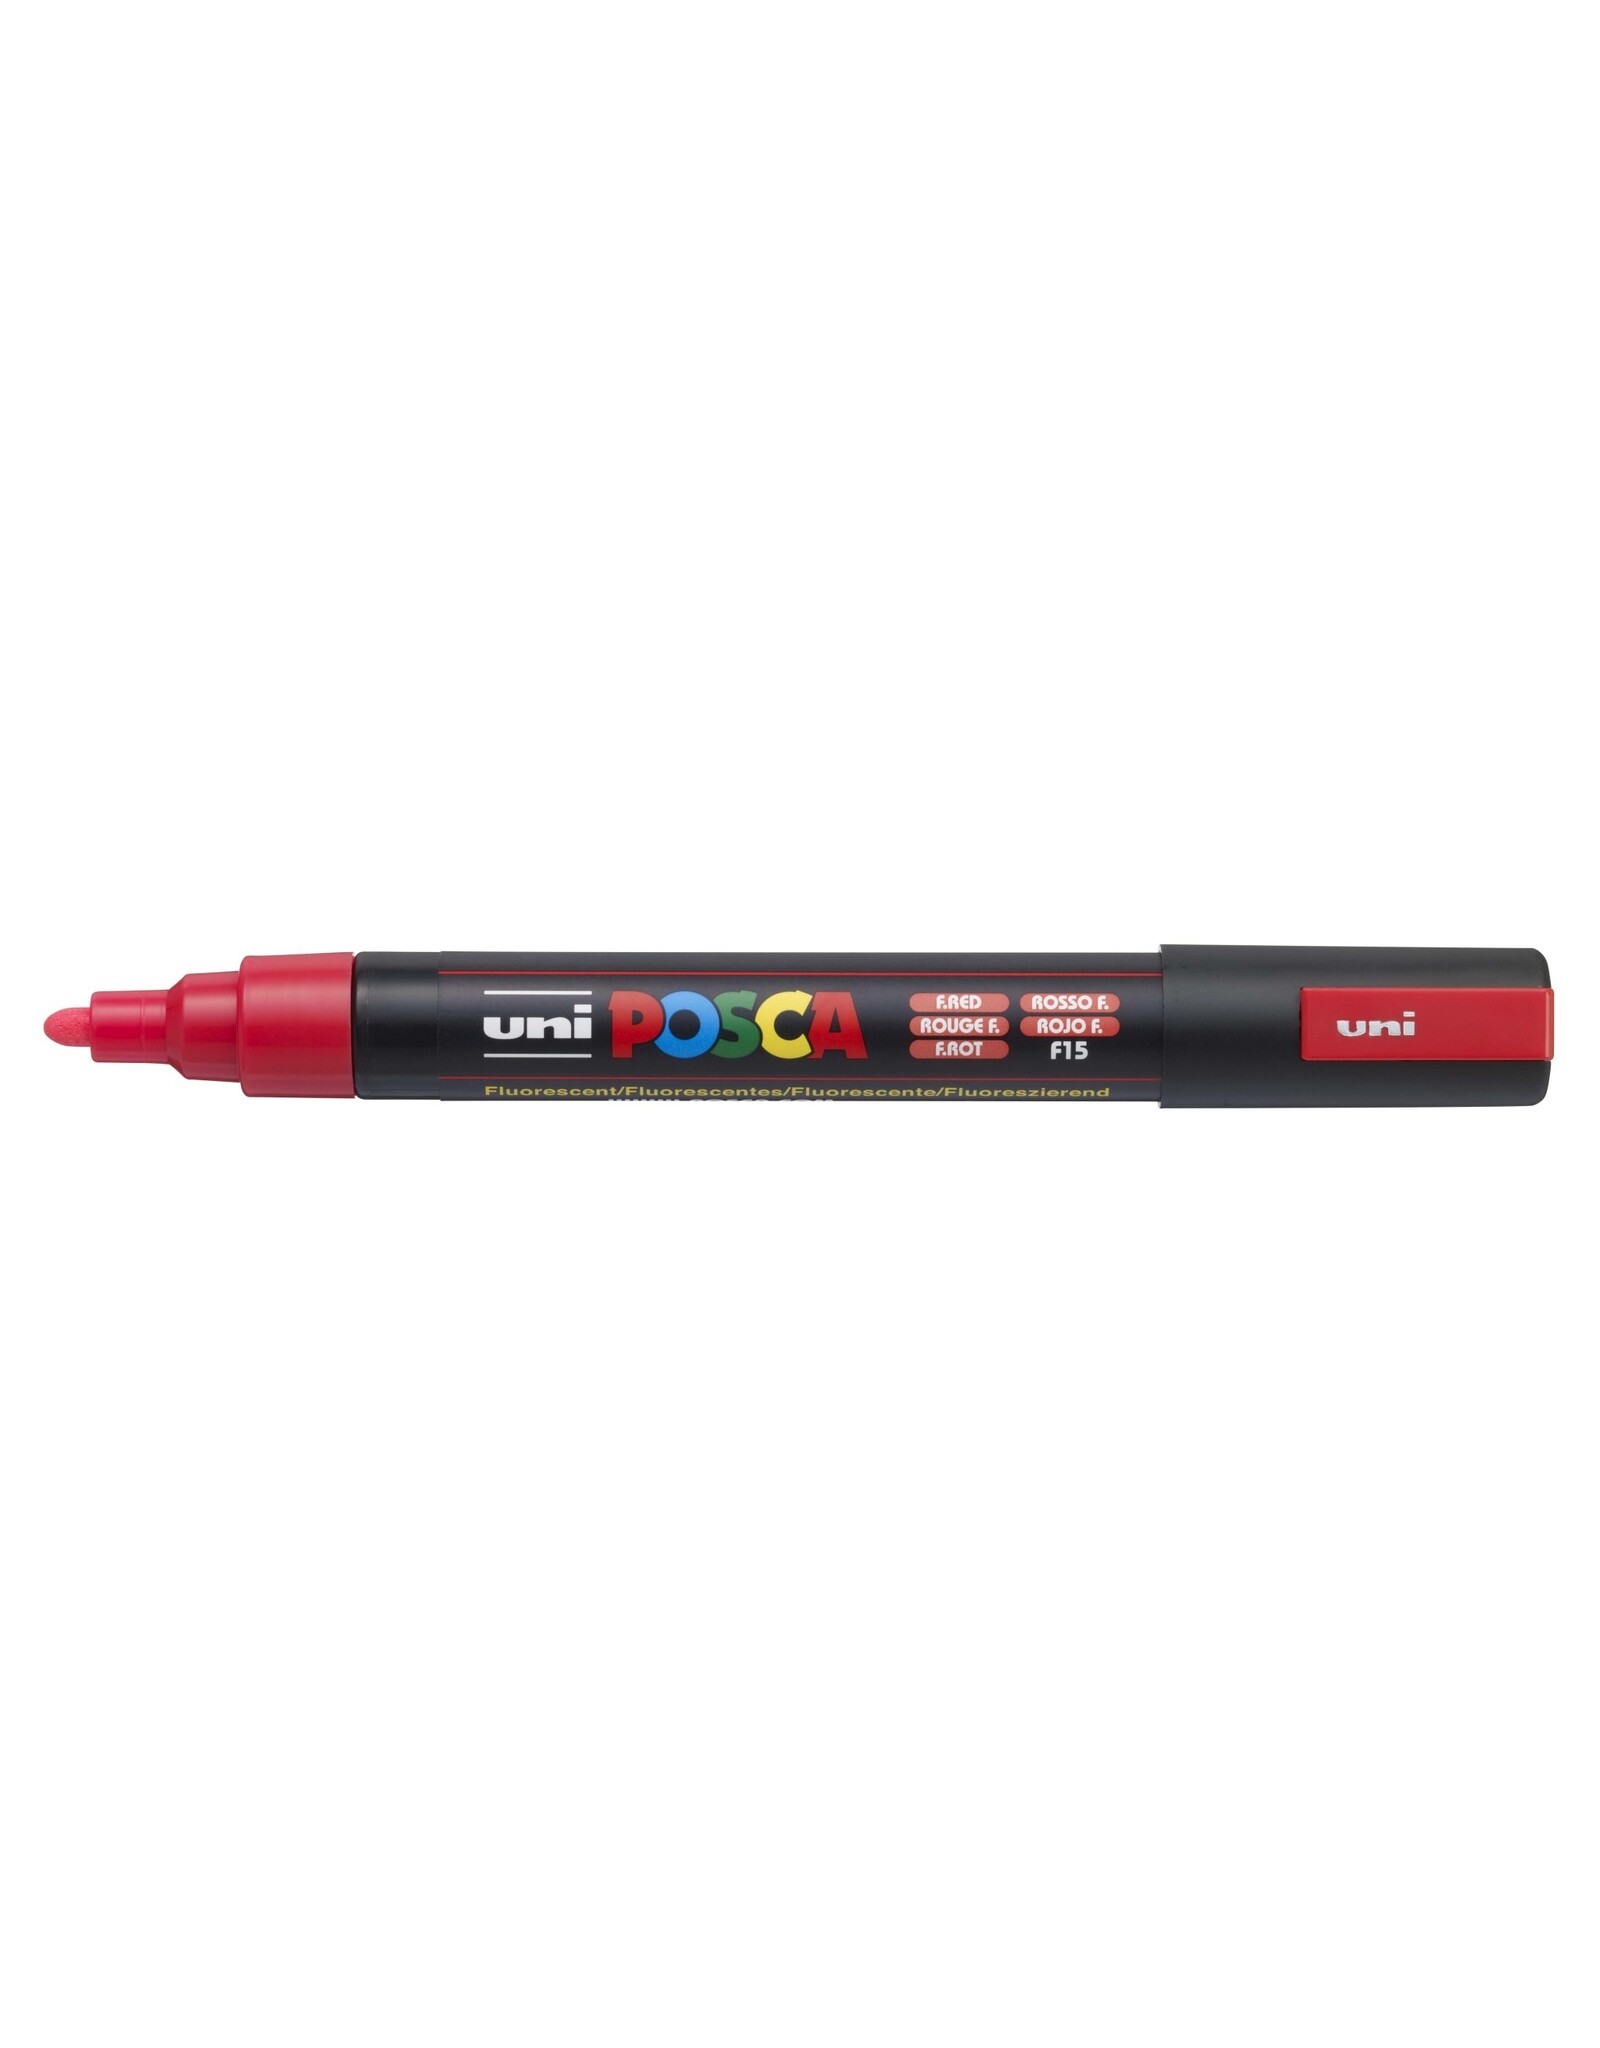 POSCA Uni POSCA Paint Marker, Medium, Fluorescent Red